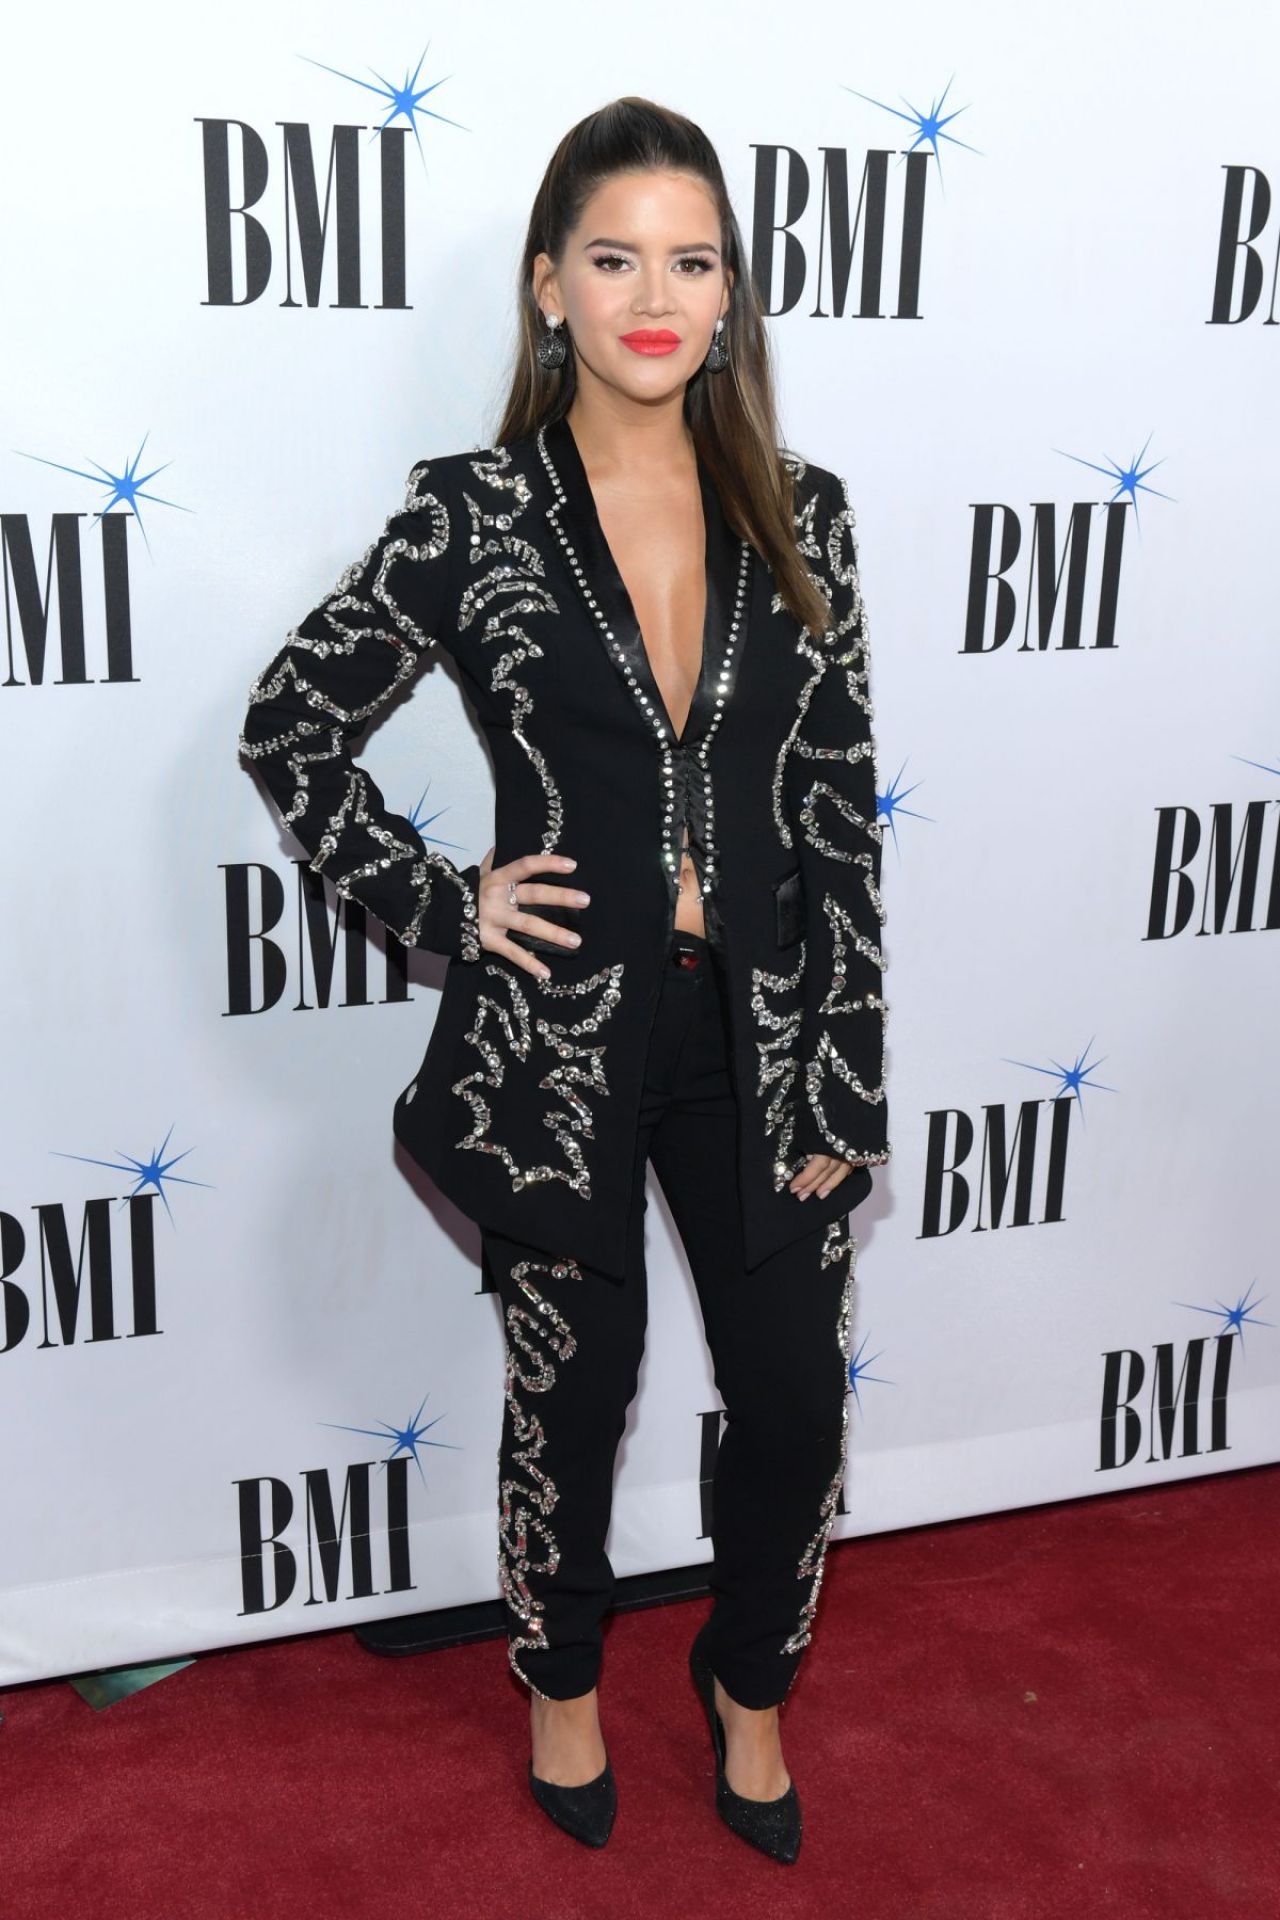 Maren Morris at BMI Country Awards 2019 in Nashville